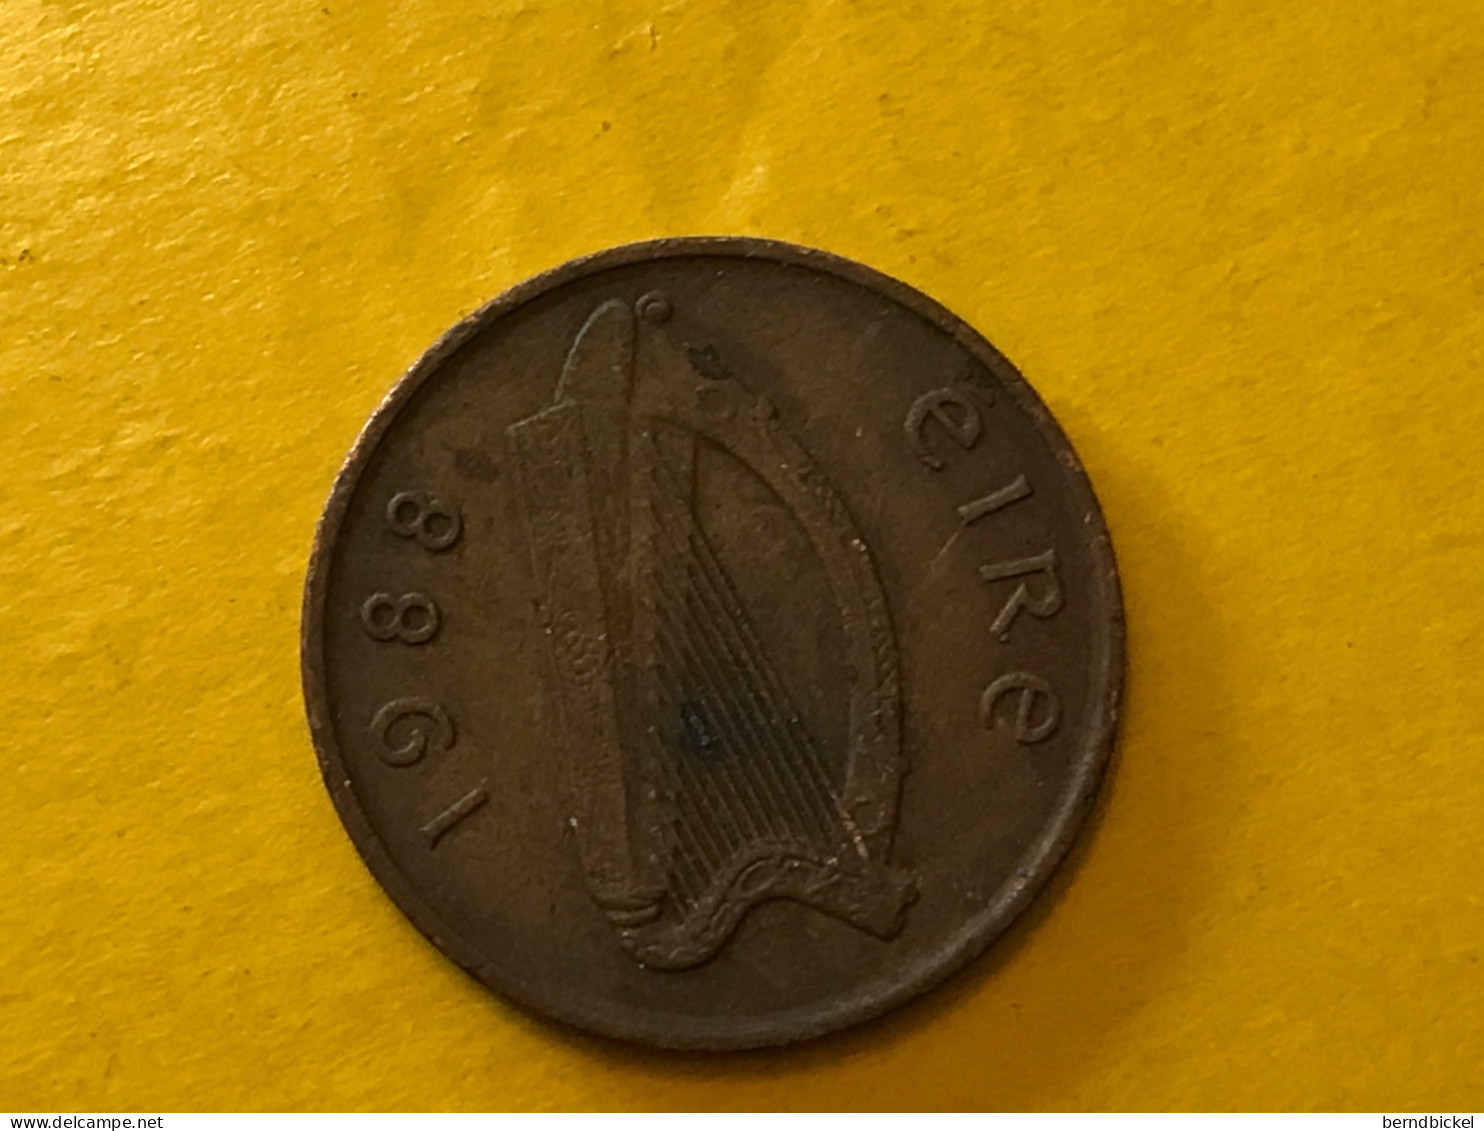 Münze Münzen Umlaufmünze Irland 1 Penny 1988 - Irland